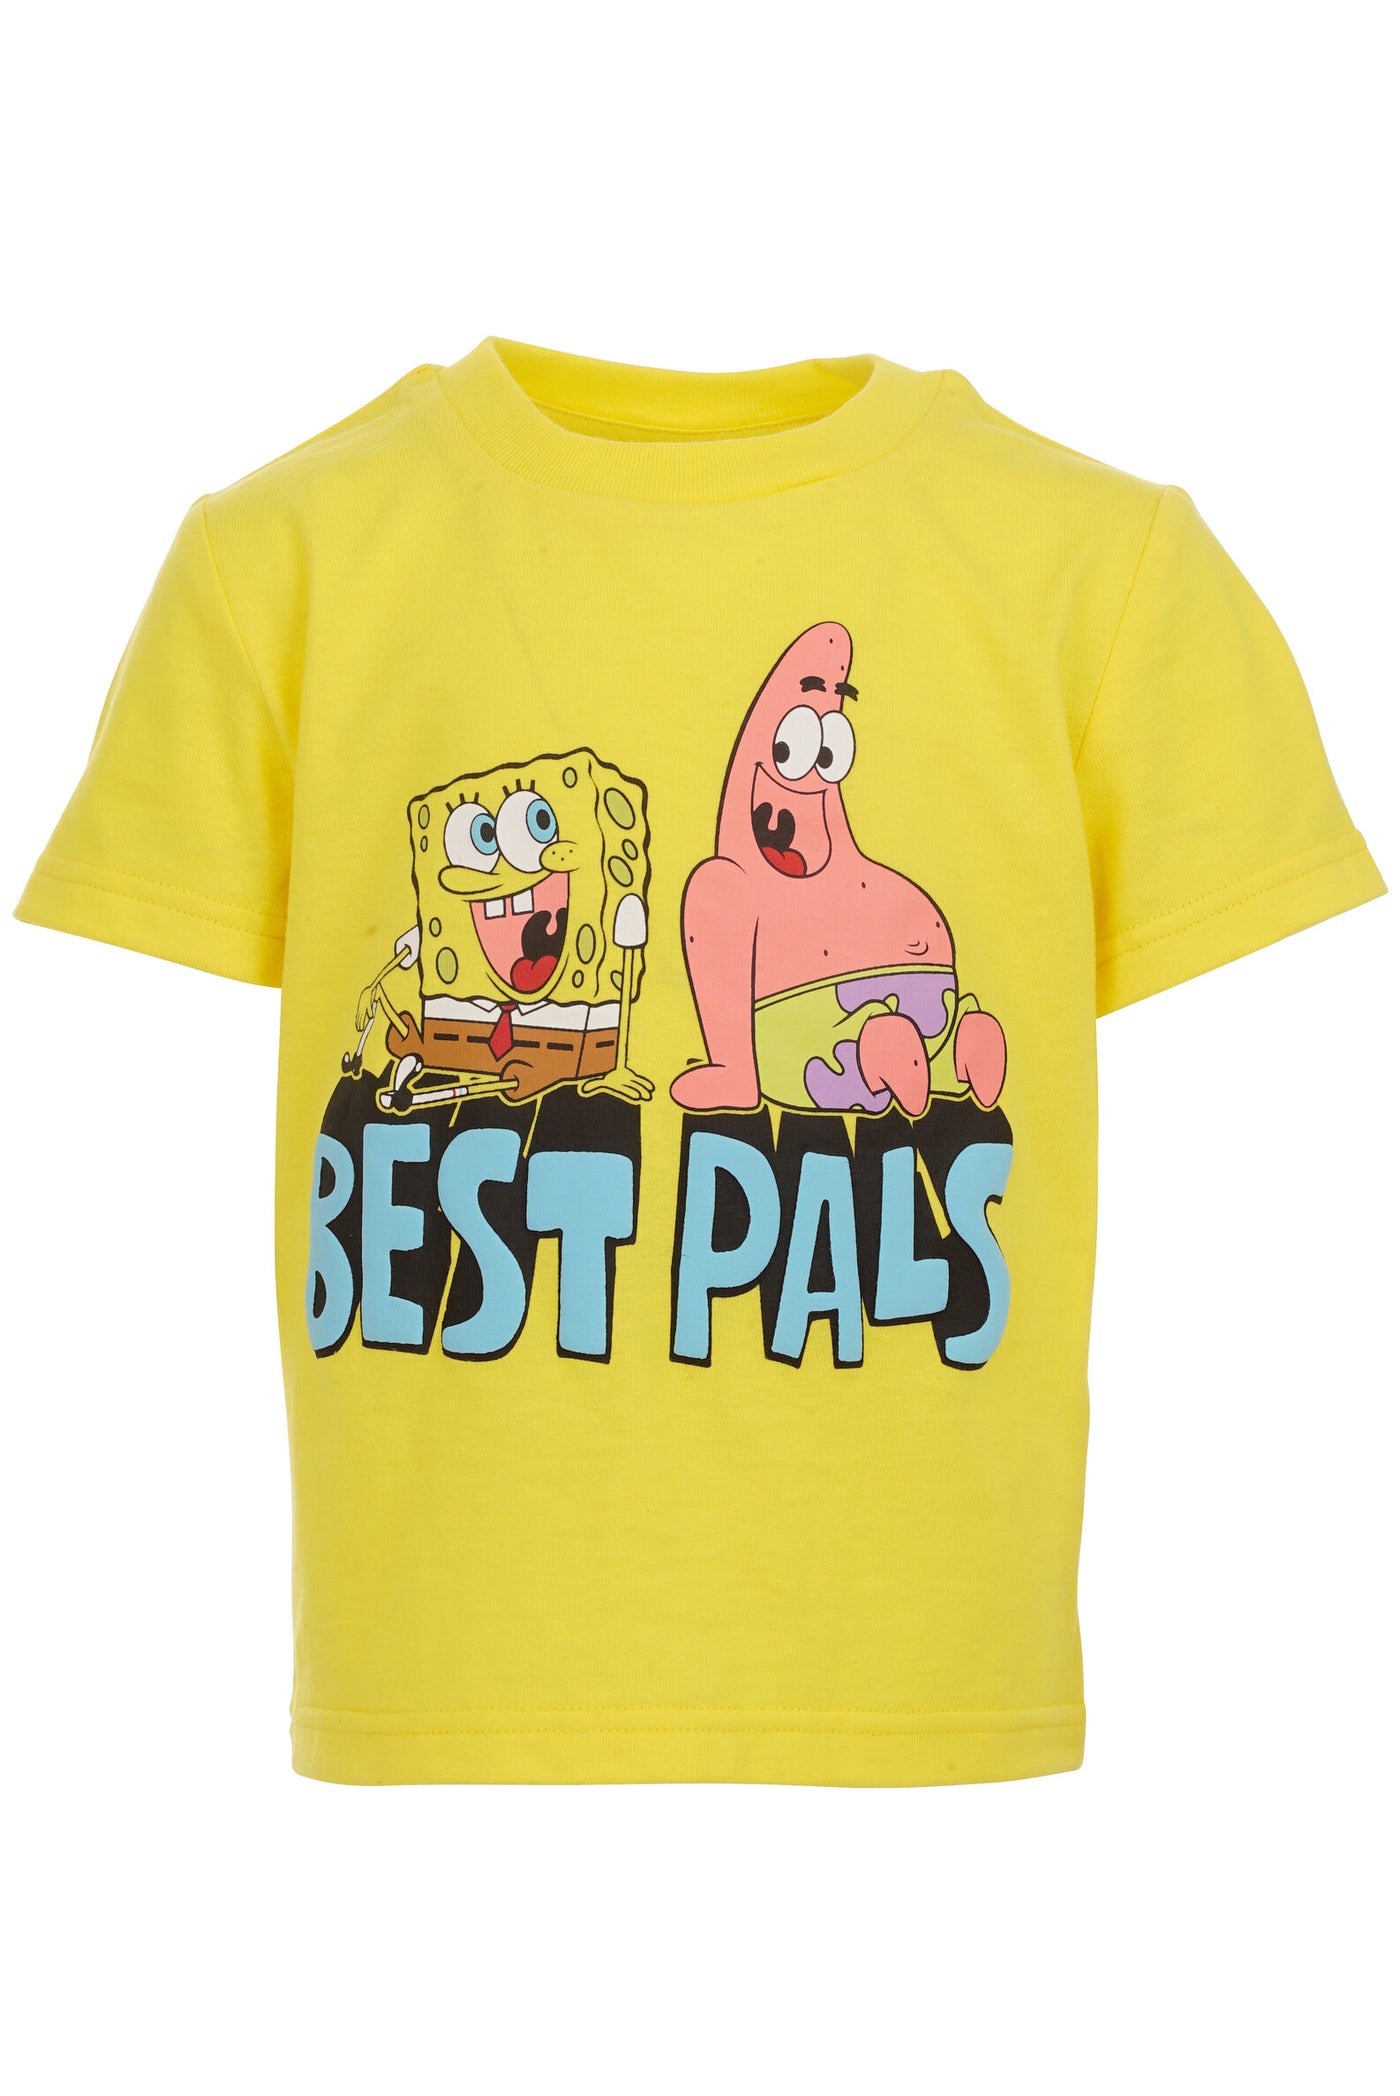 Nickelodeon SpongeBob SquarePants 3 Pack T-Shirts